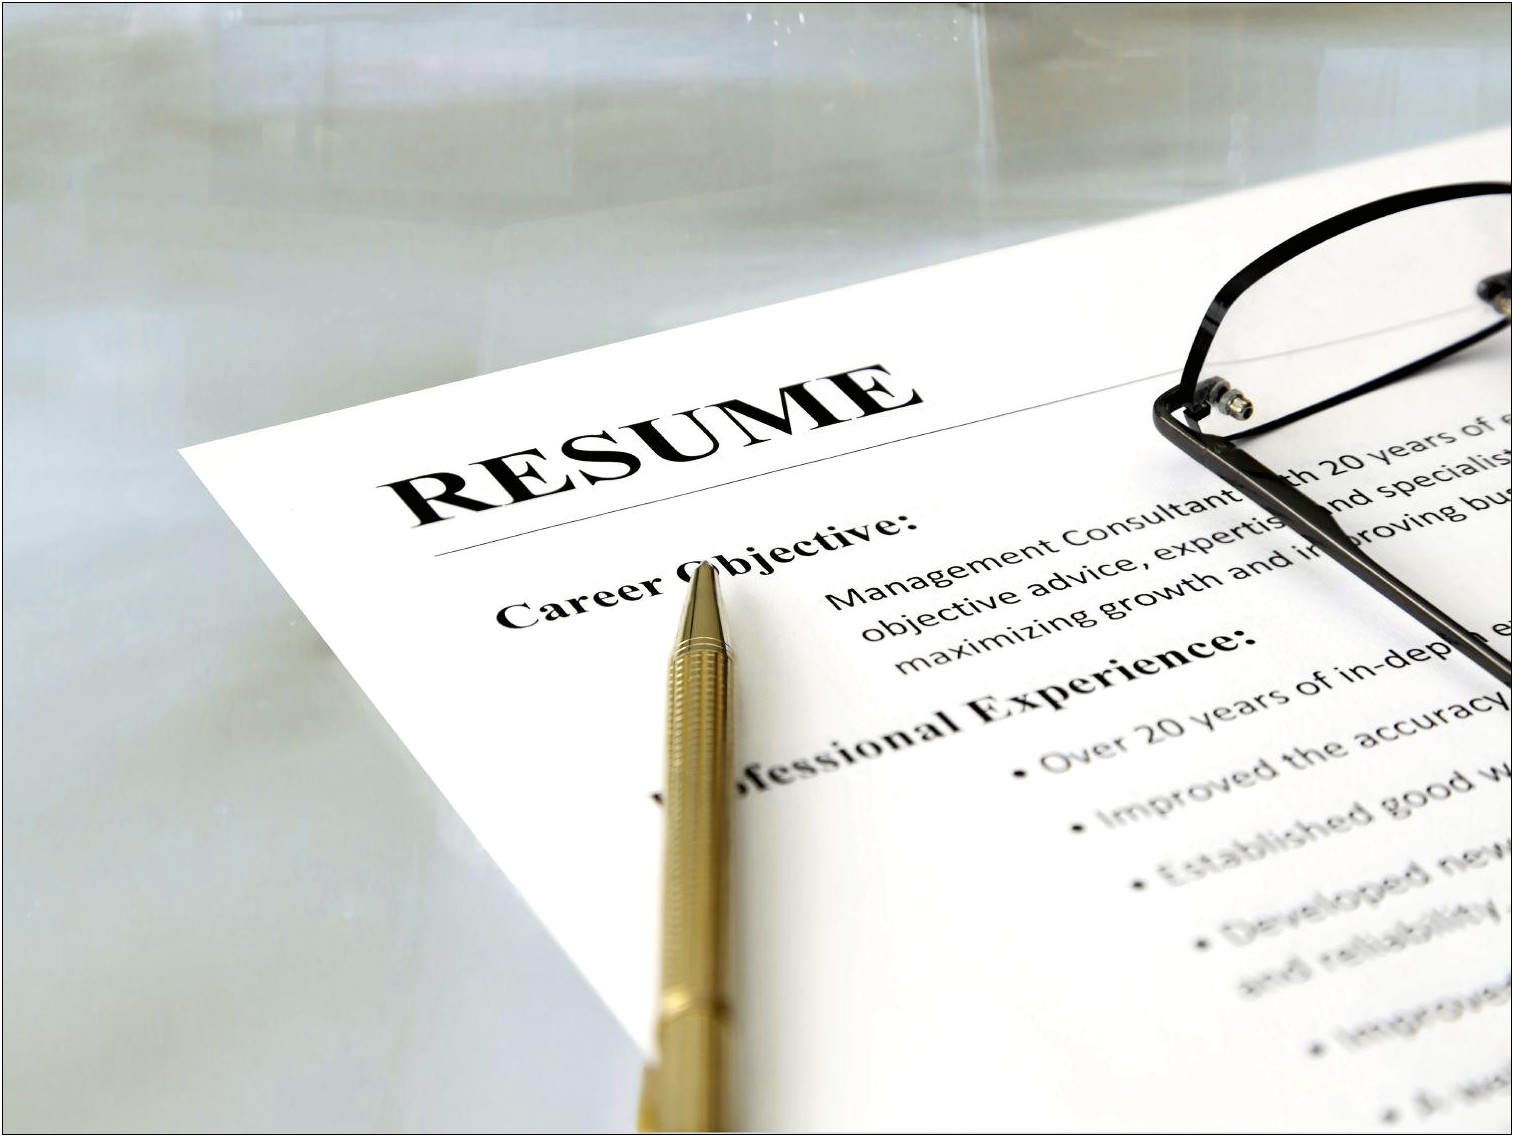 Sample Resume Objectives For Office Work